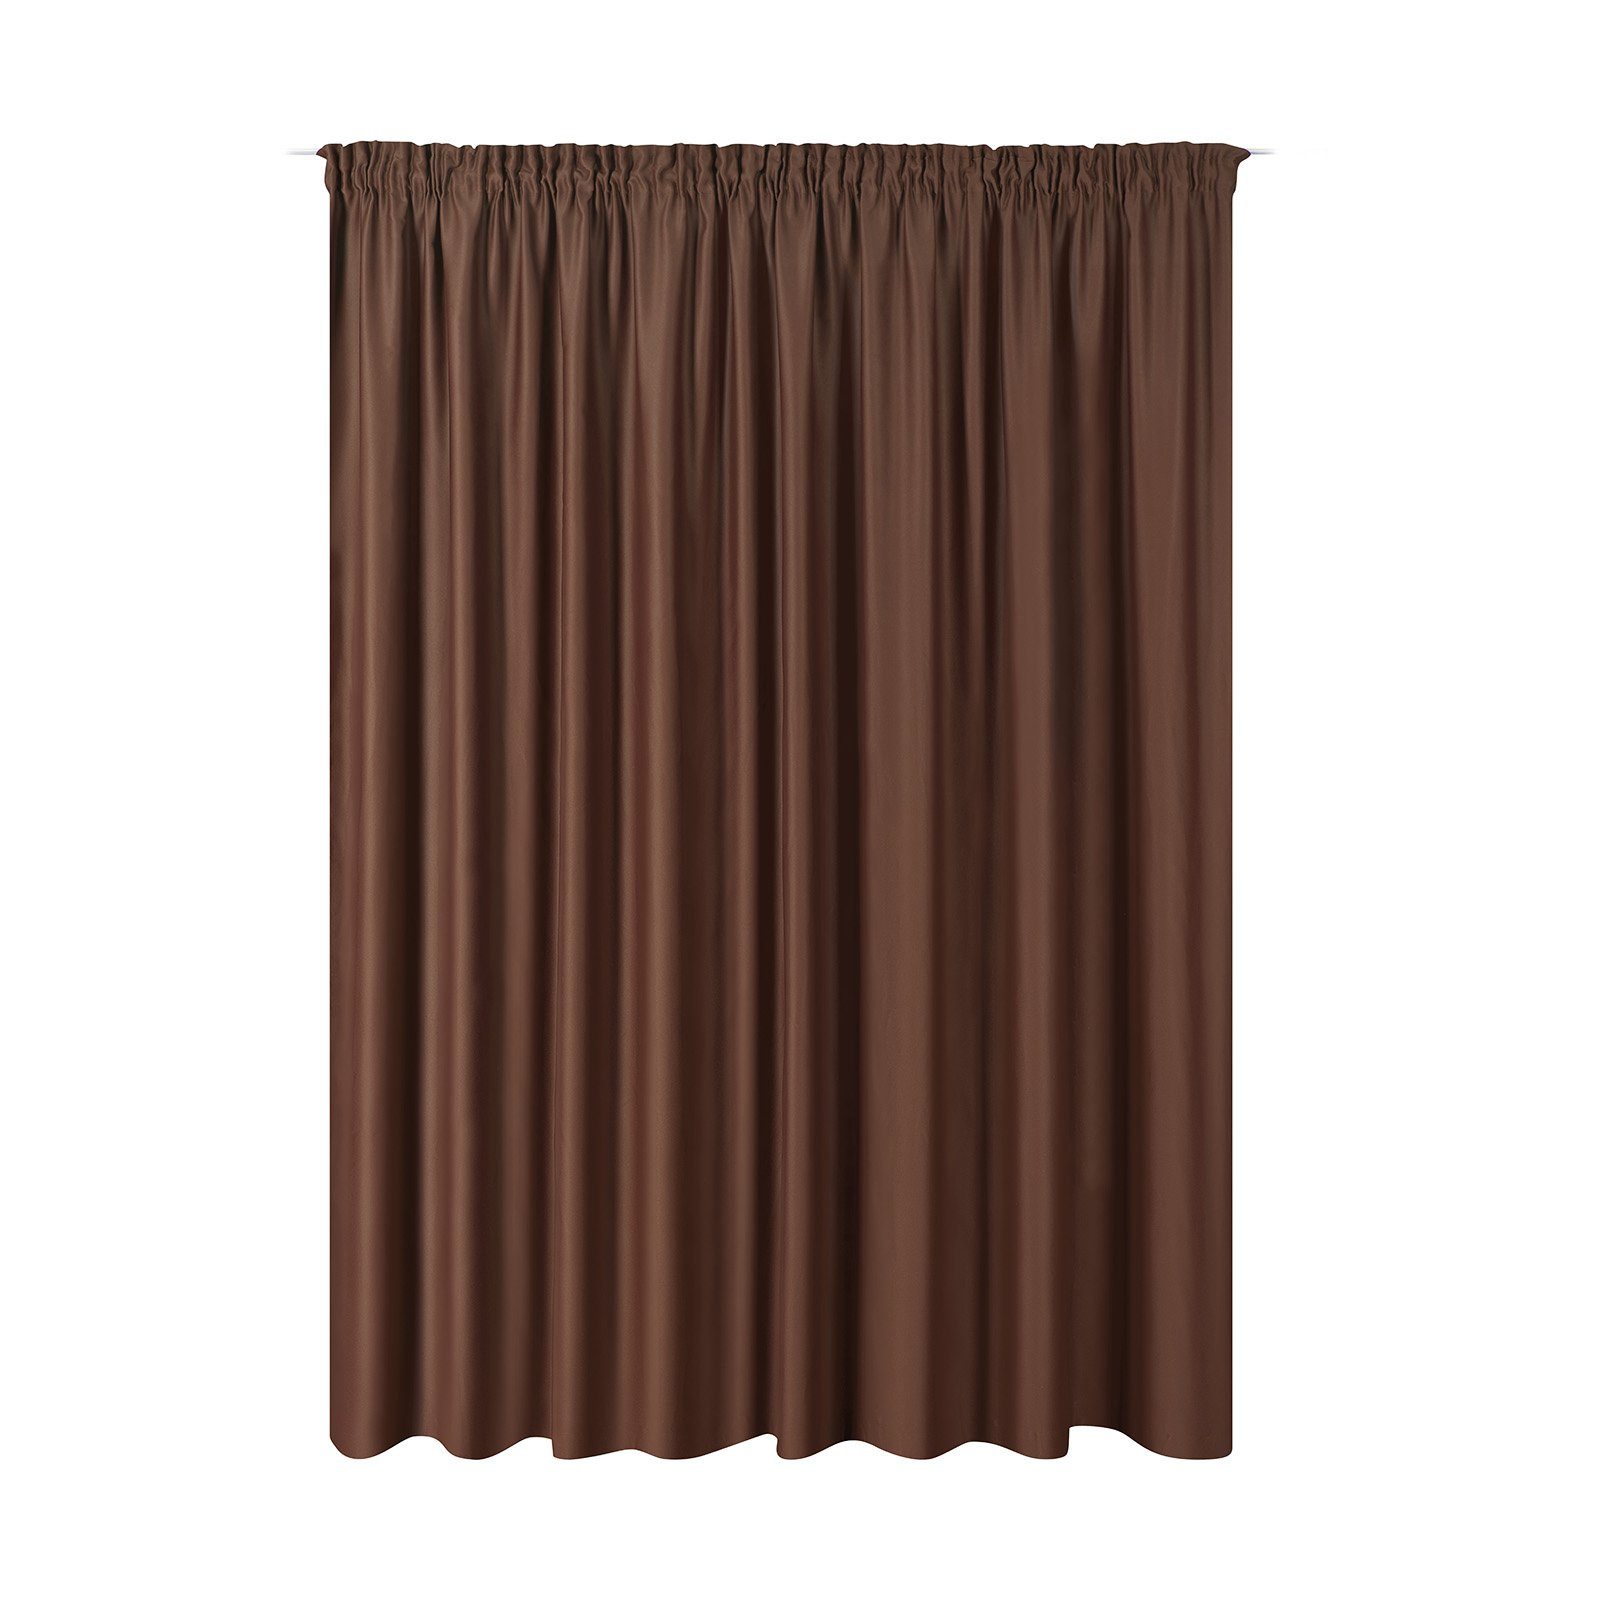 Vorhang Vorhang blickdicht, 300x245cm, Kräuselband, braun, JEMIDI Dunkelbraun